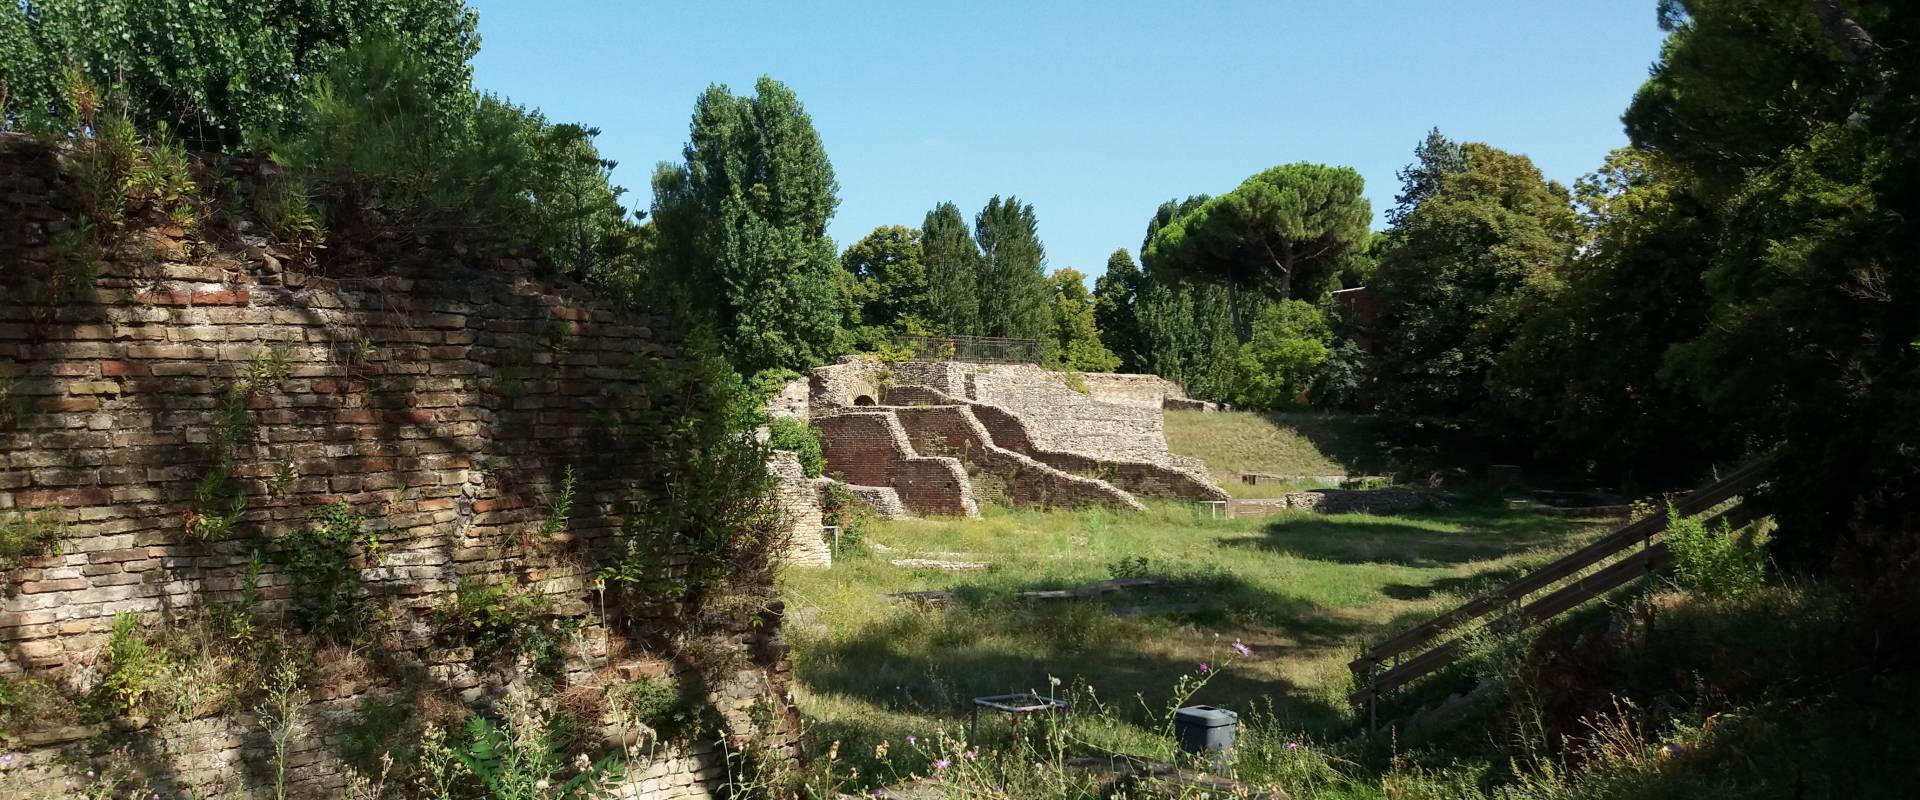 Anfiteatro romano di Rimini 01 foto di Oleh Kushch